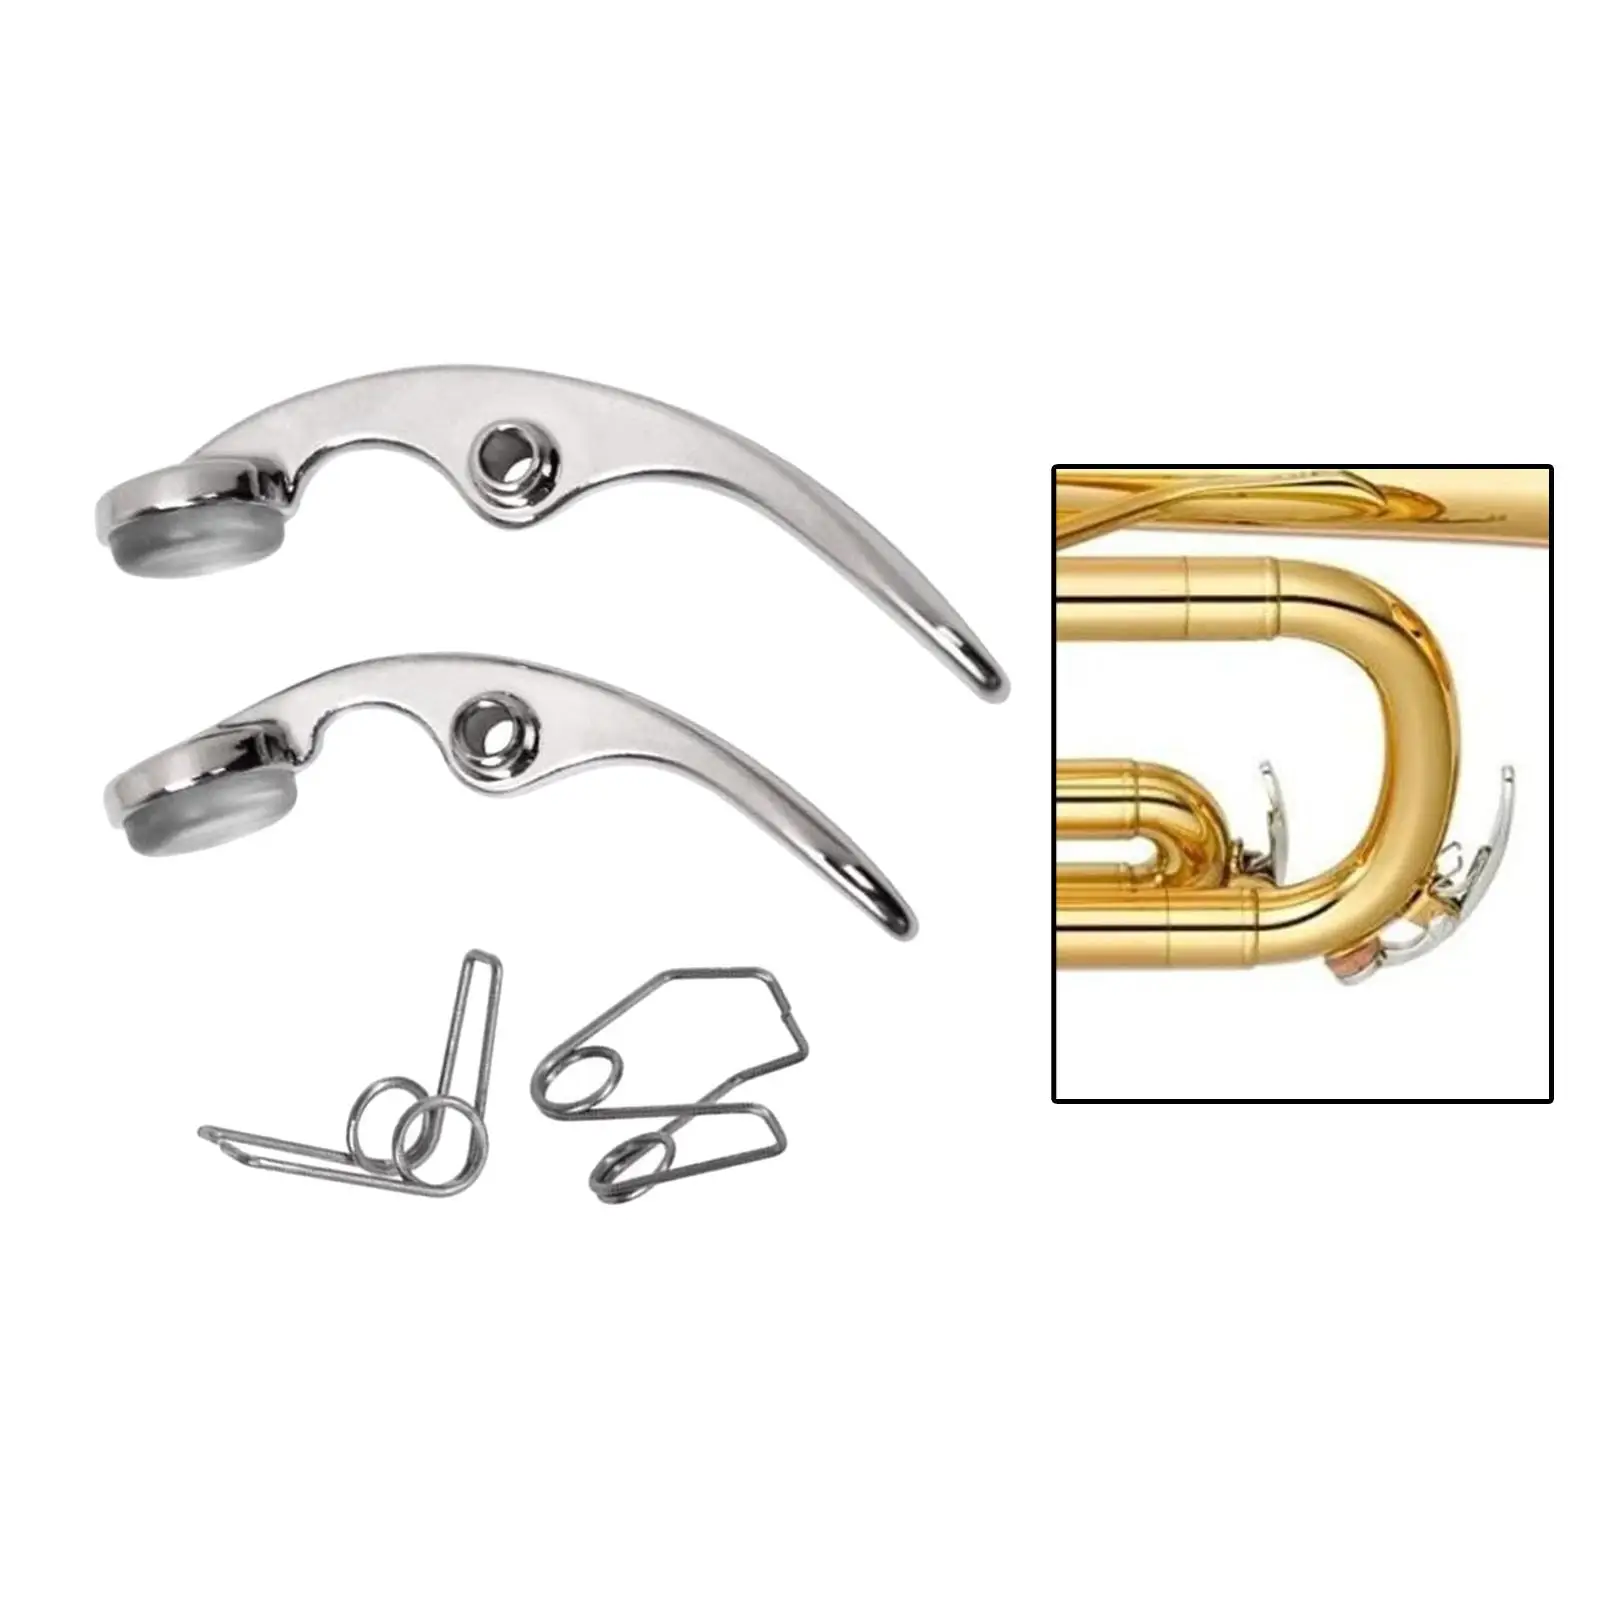 Trumpet Spit Valve Professional Water Value Valve Repair Kits for Wind Instrument Brass Instrument Trombone Trumpet Repairing